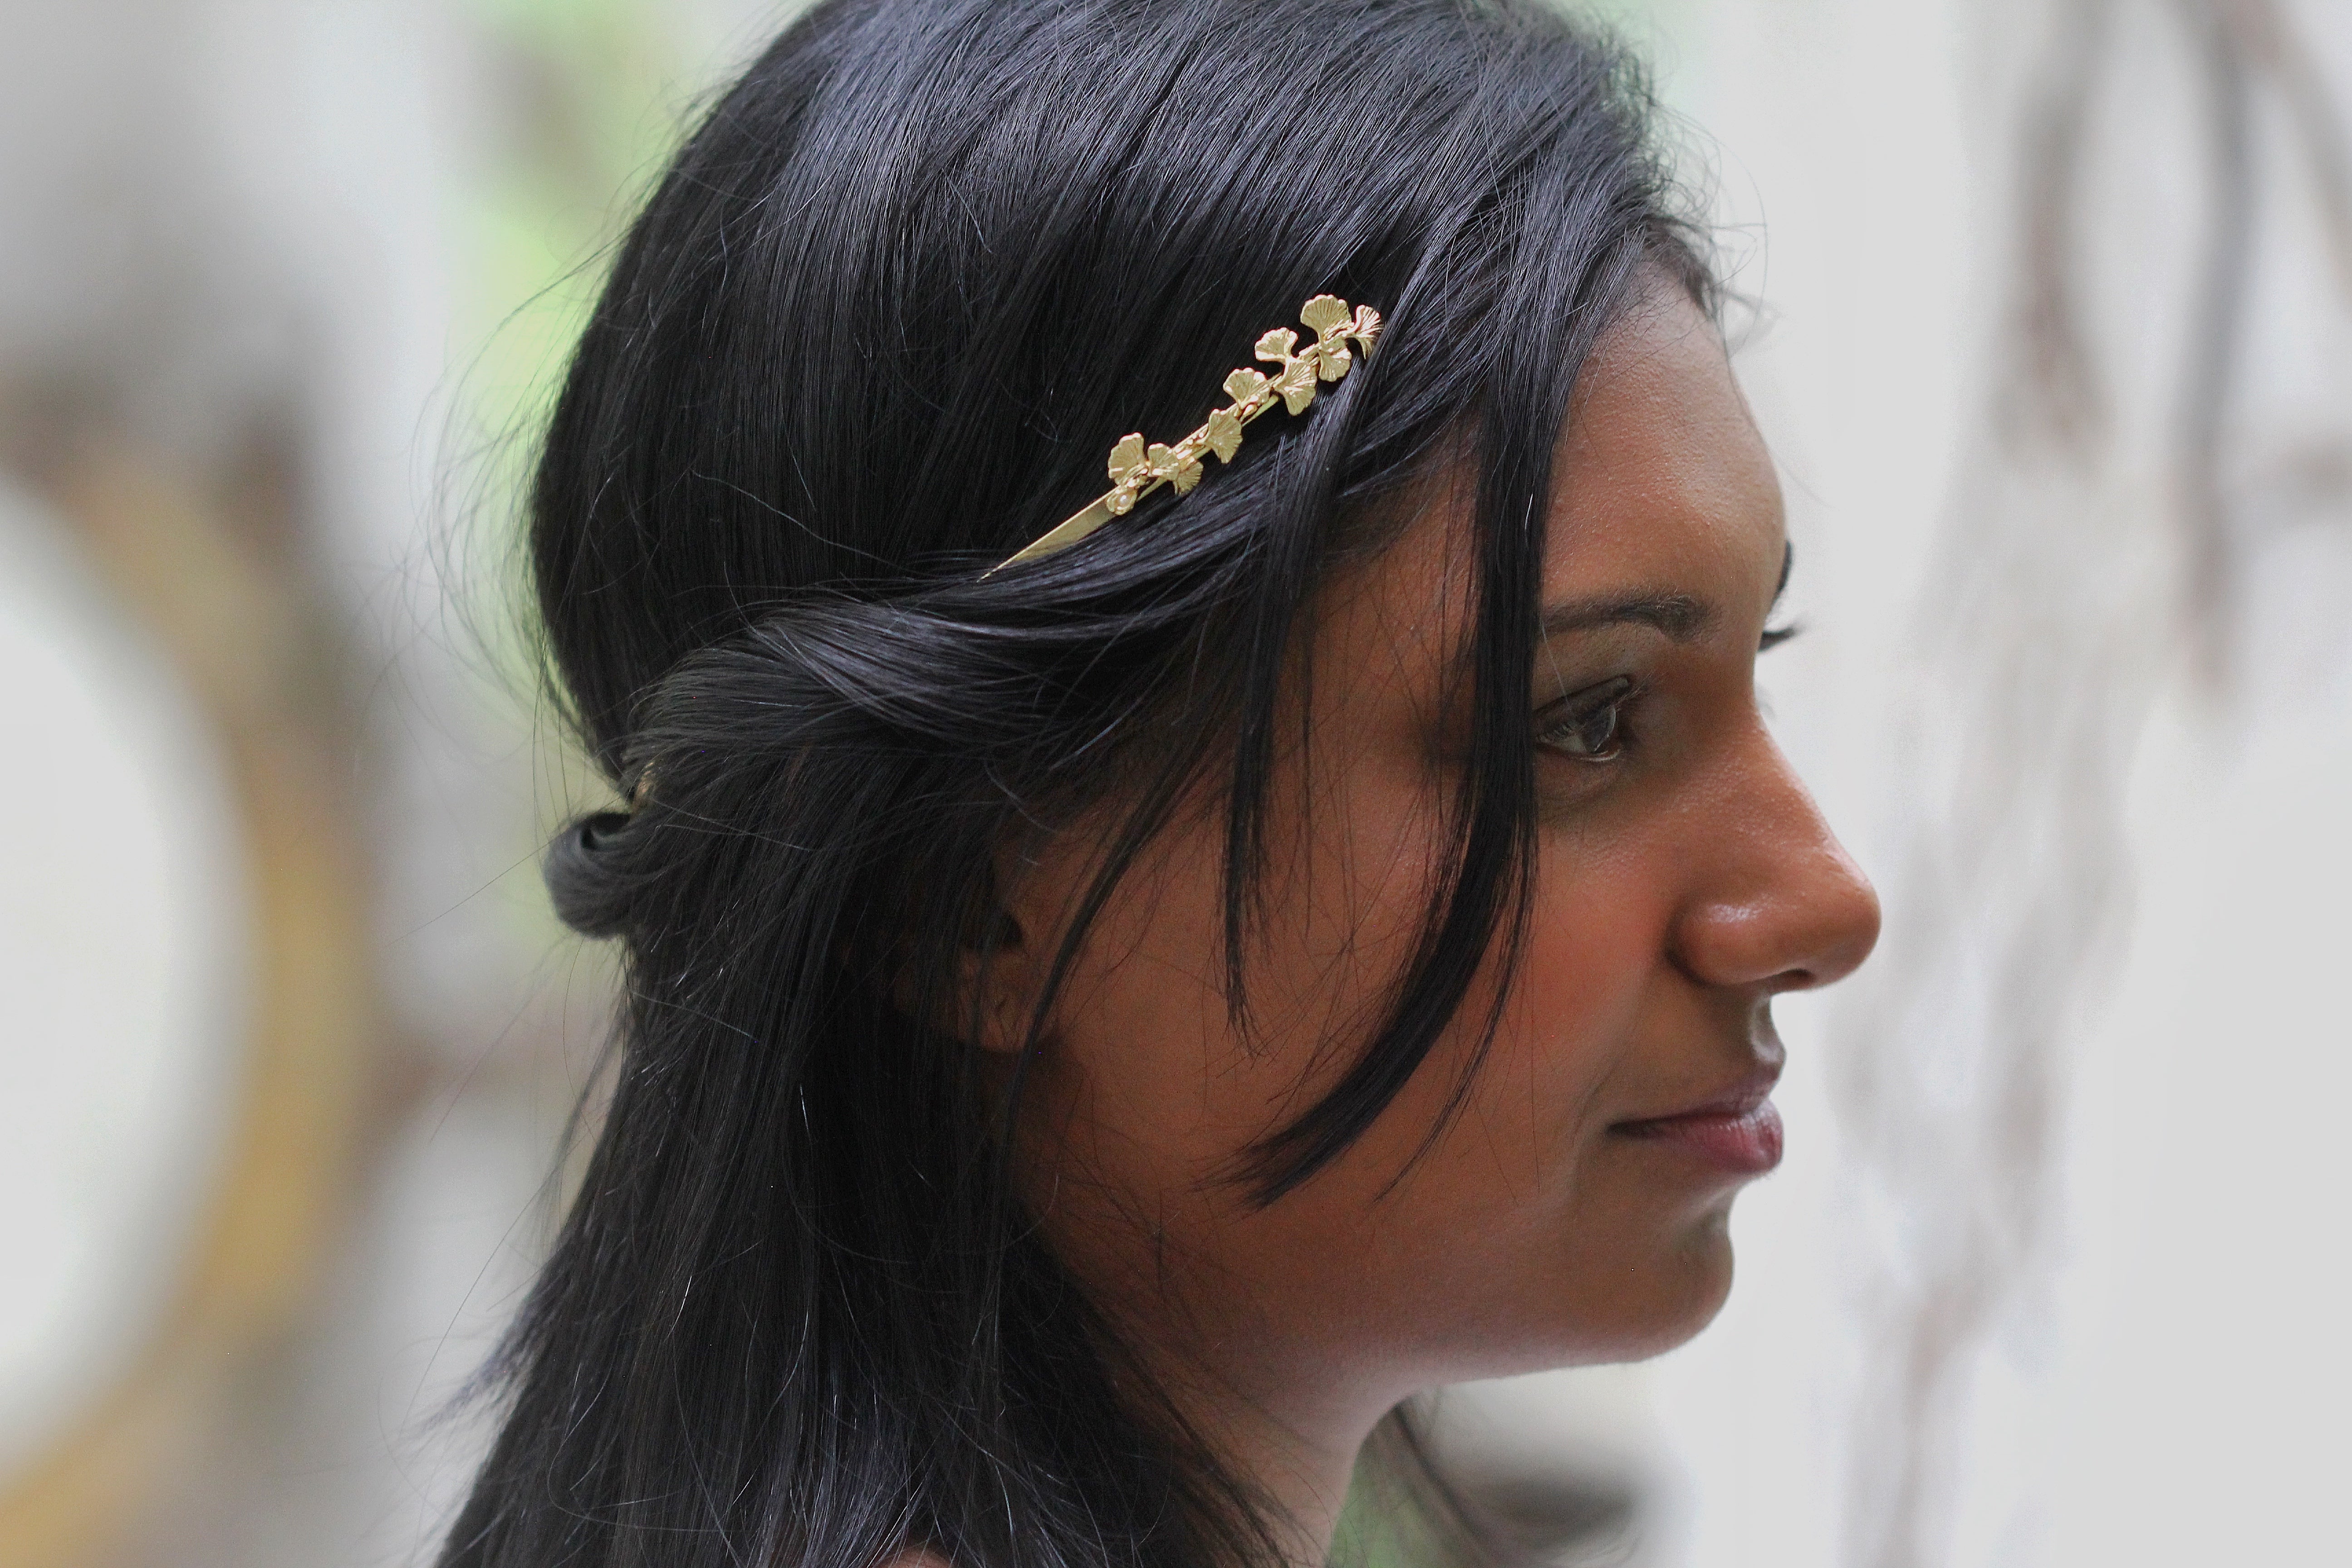 Ginkgo Leaves Goddess Crown